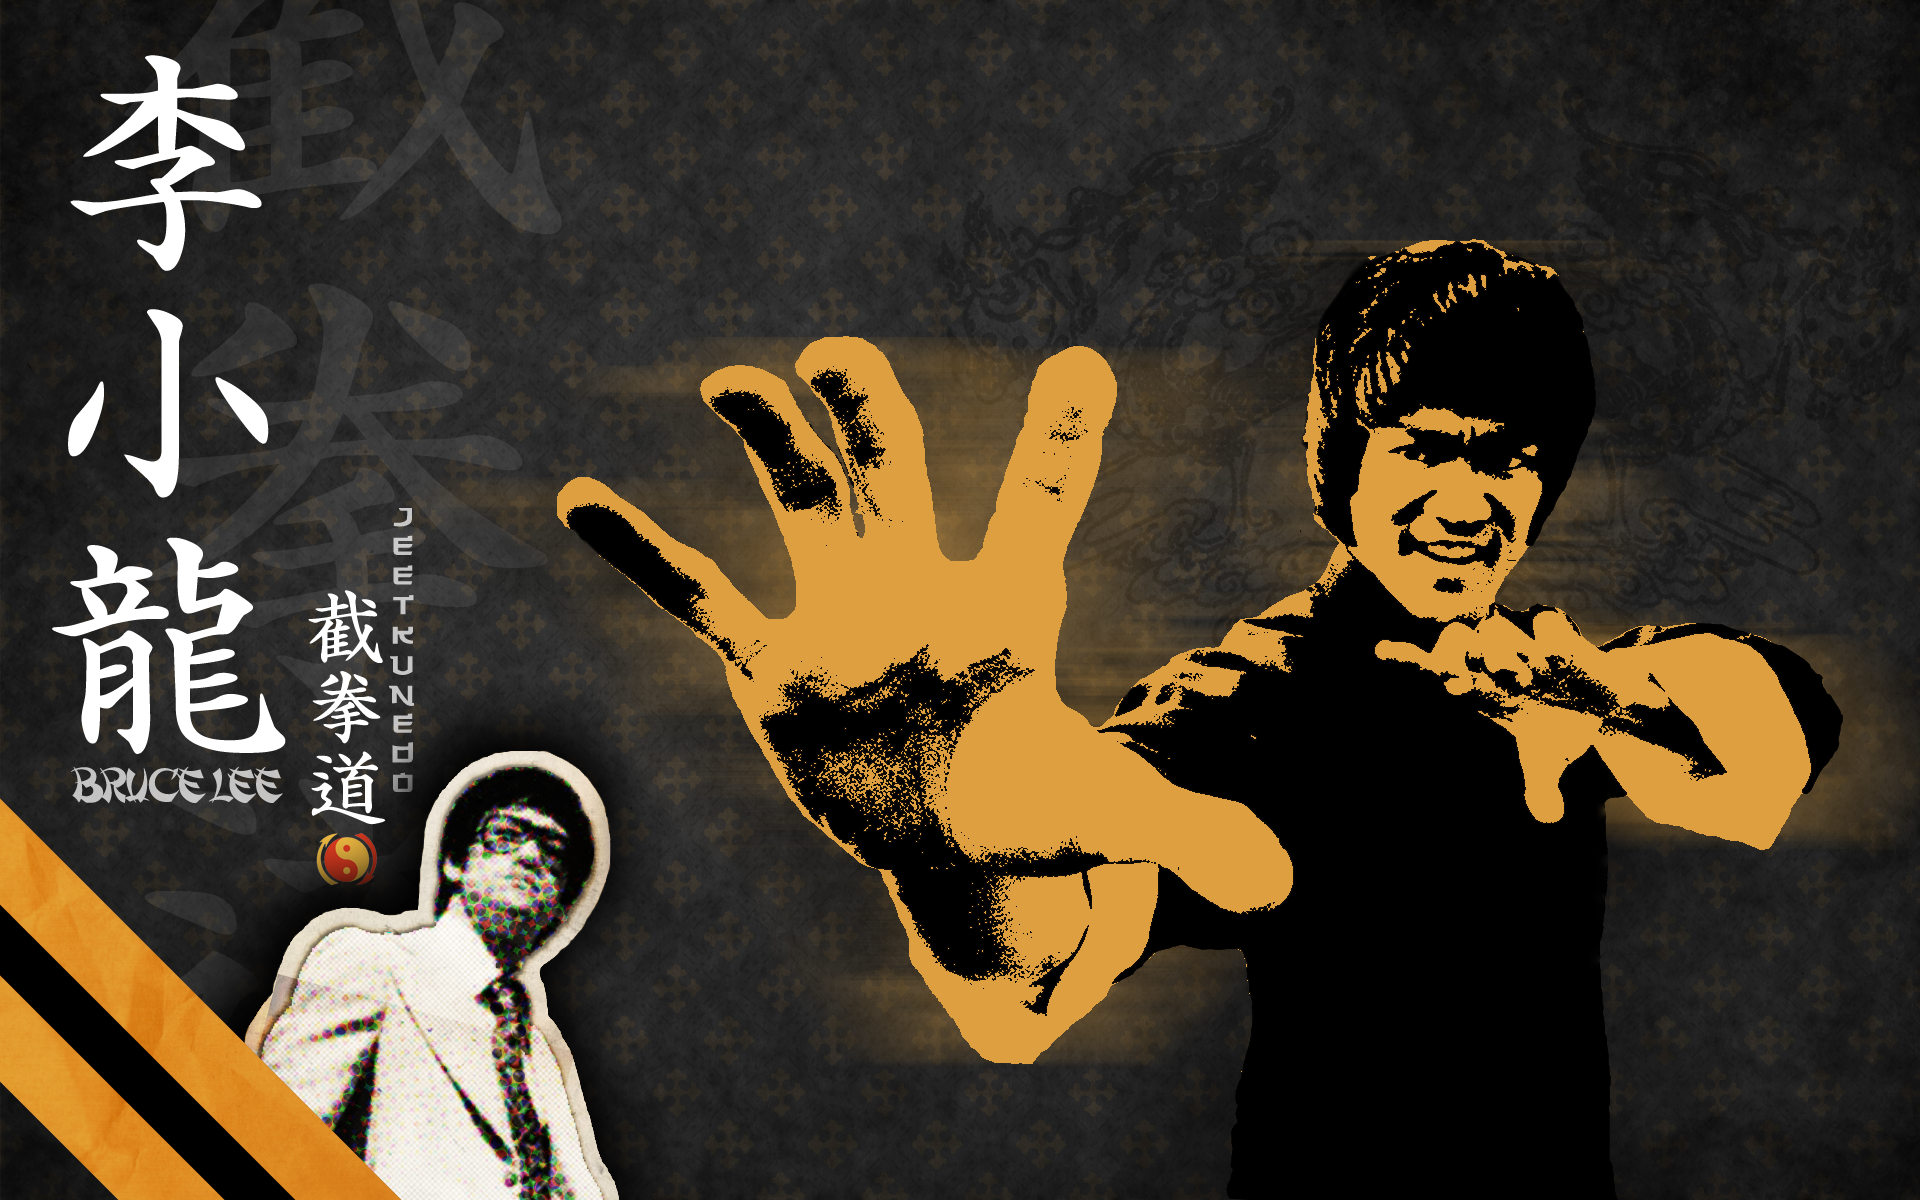 Bruce Lee Wallpaper 1920x1200 Bruce Lee 1920x1200